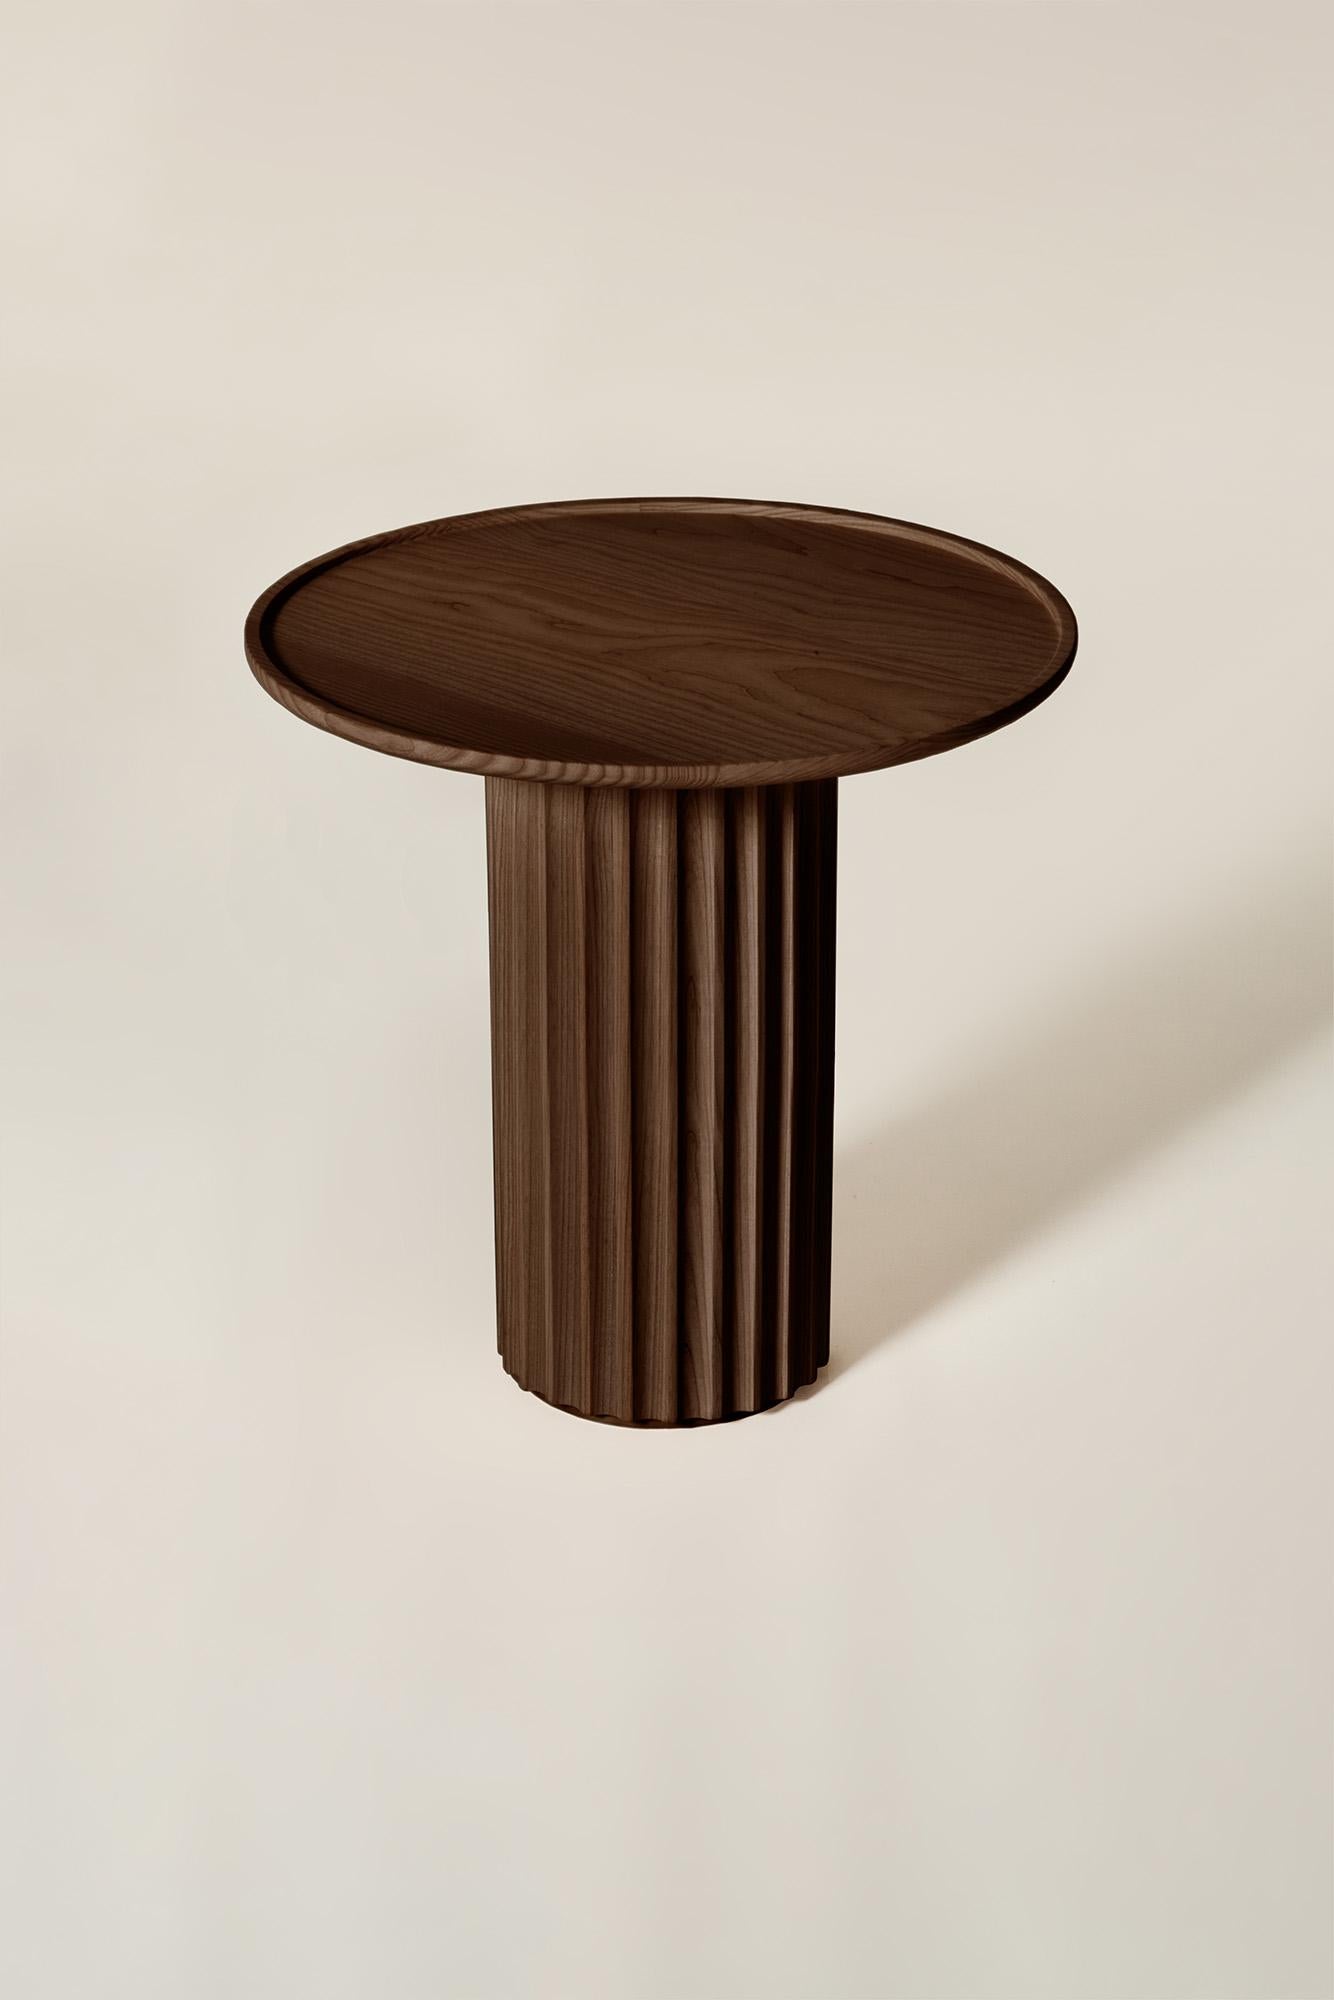 Européen Table basse Capitello en bois massif, finition en frêne brun, contemporaine en vente